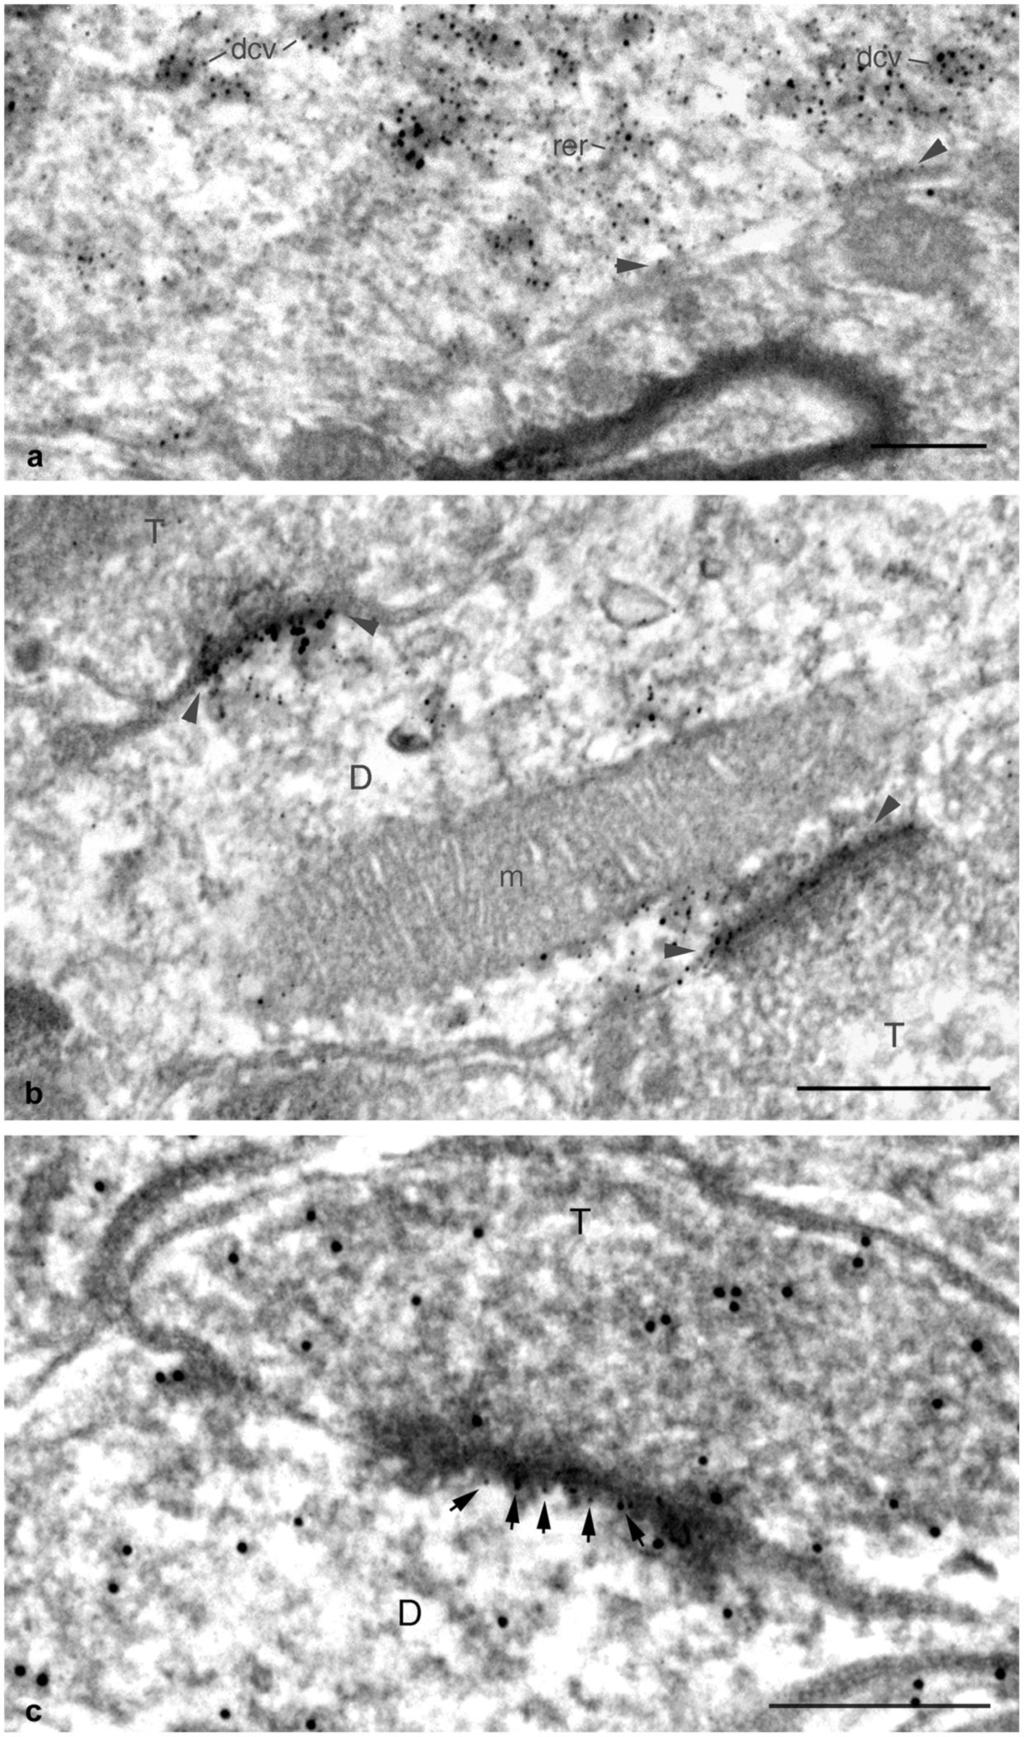 Belenky et al. Page 27 Fig. 9. Electron micrographs demonstrating sub-cellular distribution of WNK3 kinase in SCN neurons.